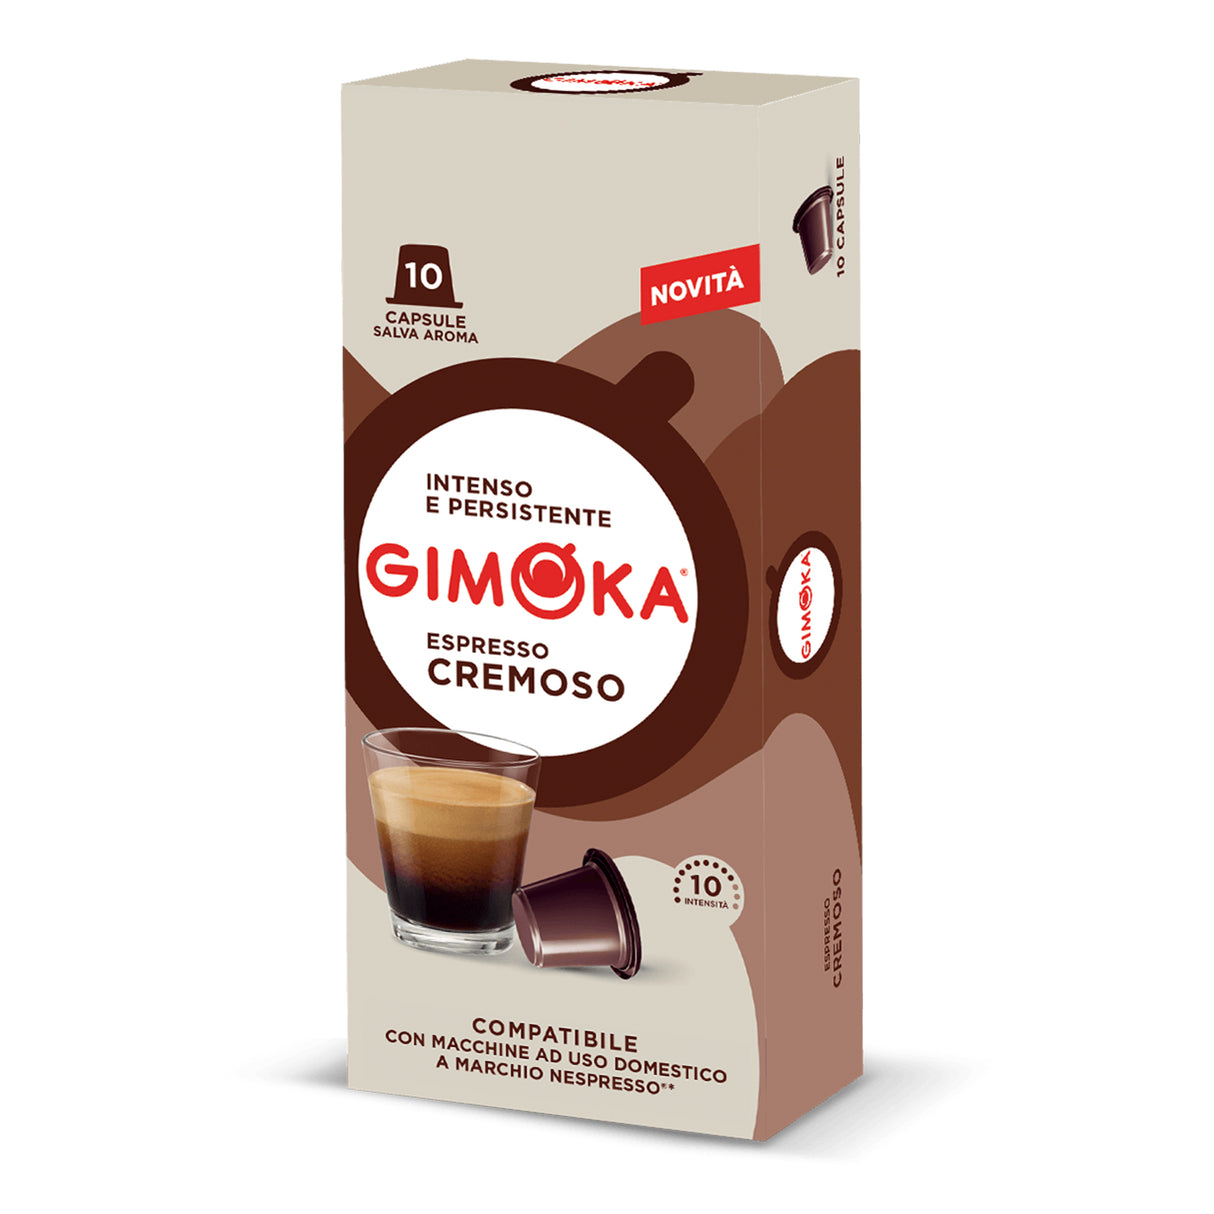 Gimoka Espresso Cremoso Coffee Pods